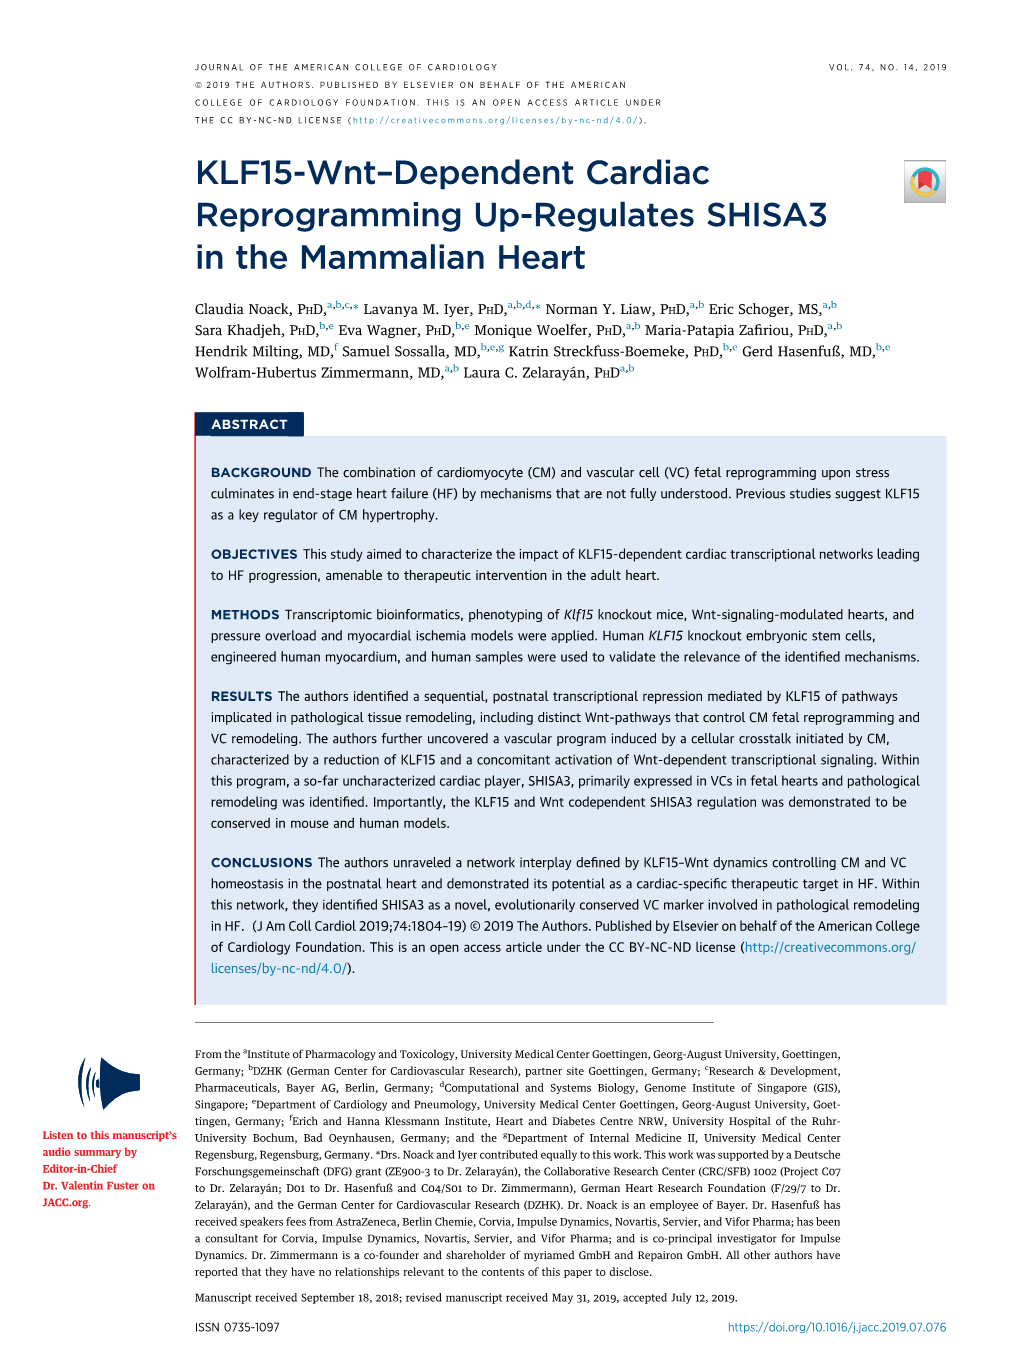 KLF15-Wnt-Dependent Cardiac Reprogramming Up-Regulates SHISA3 in the Mammalian Heart